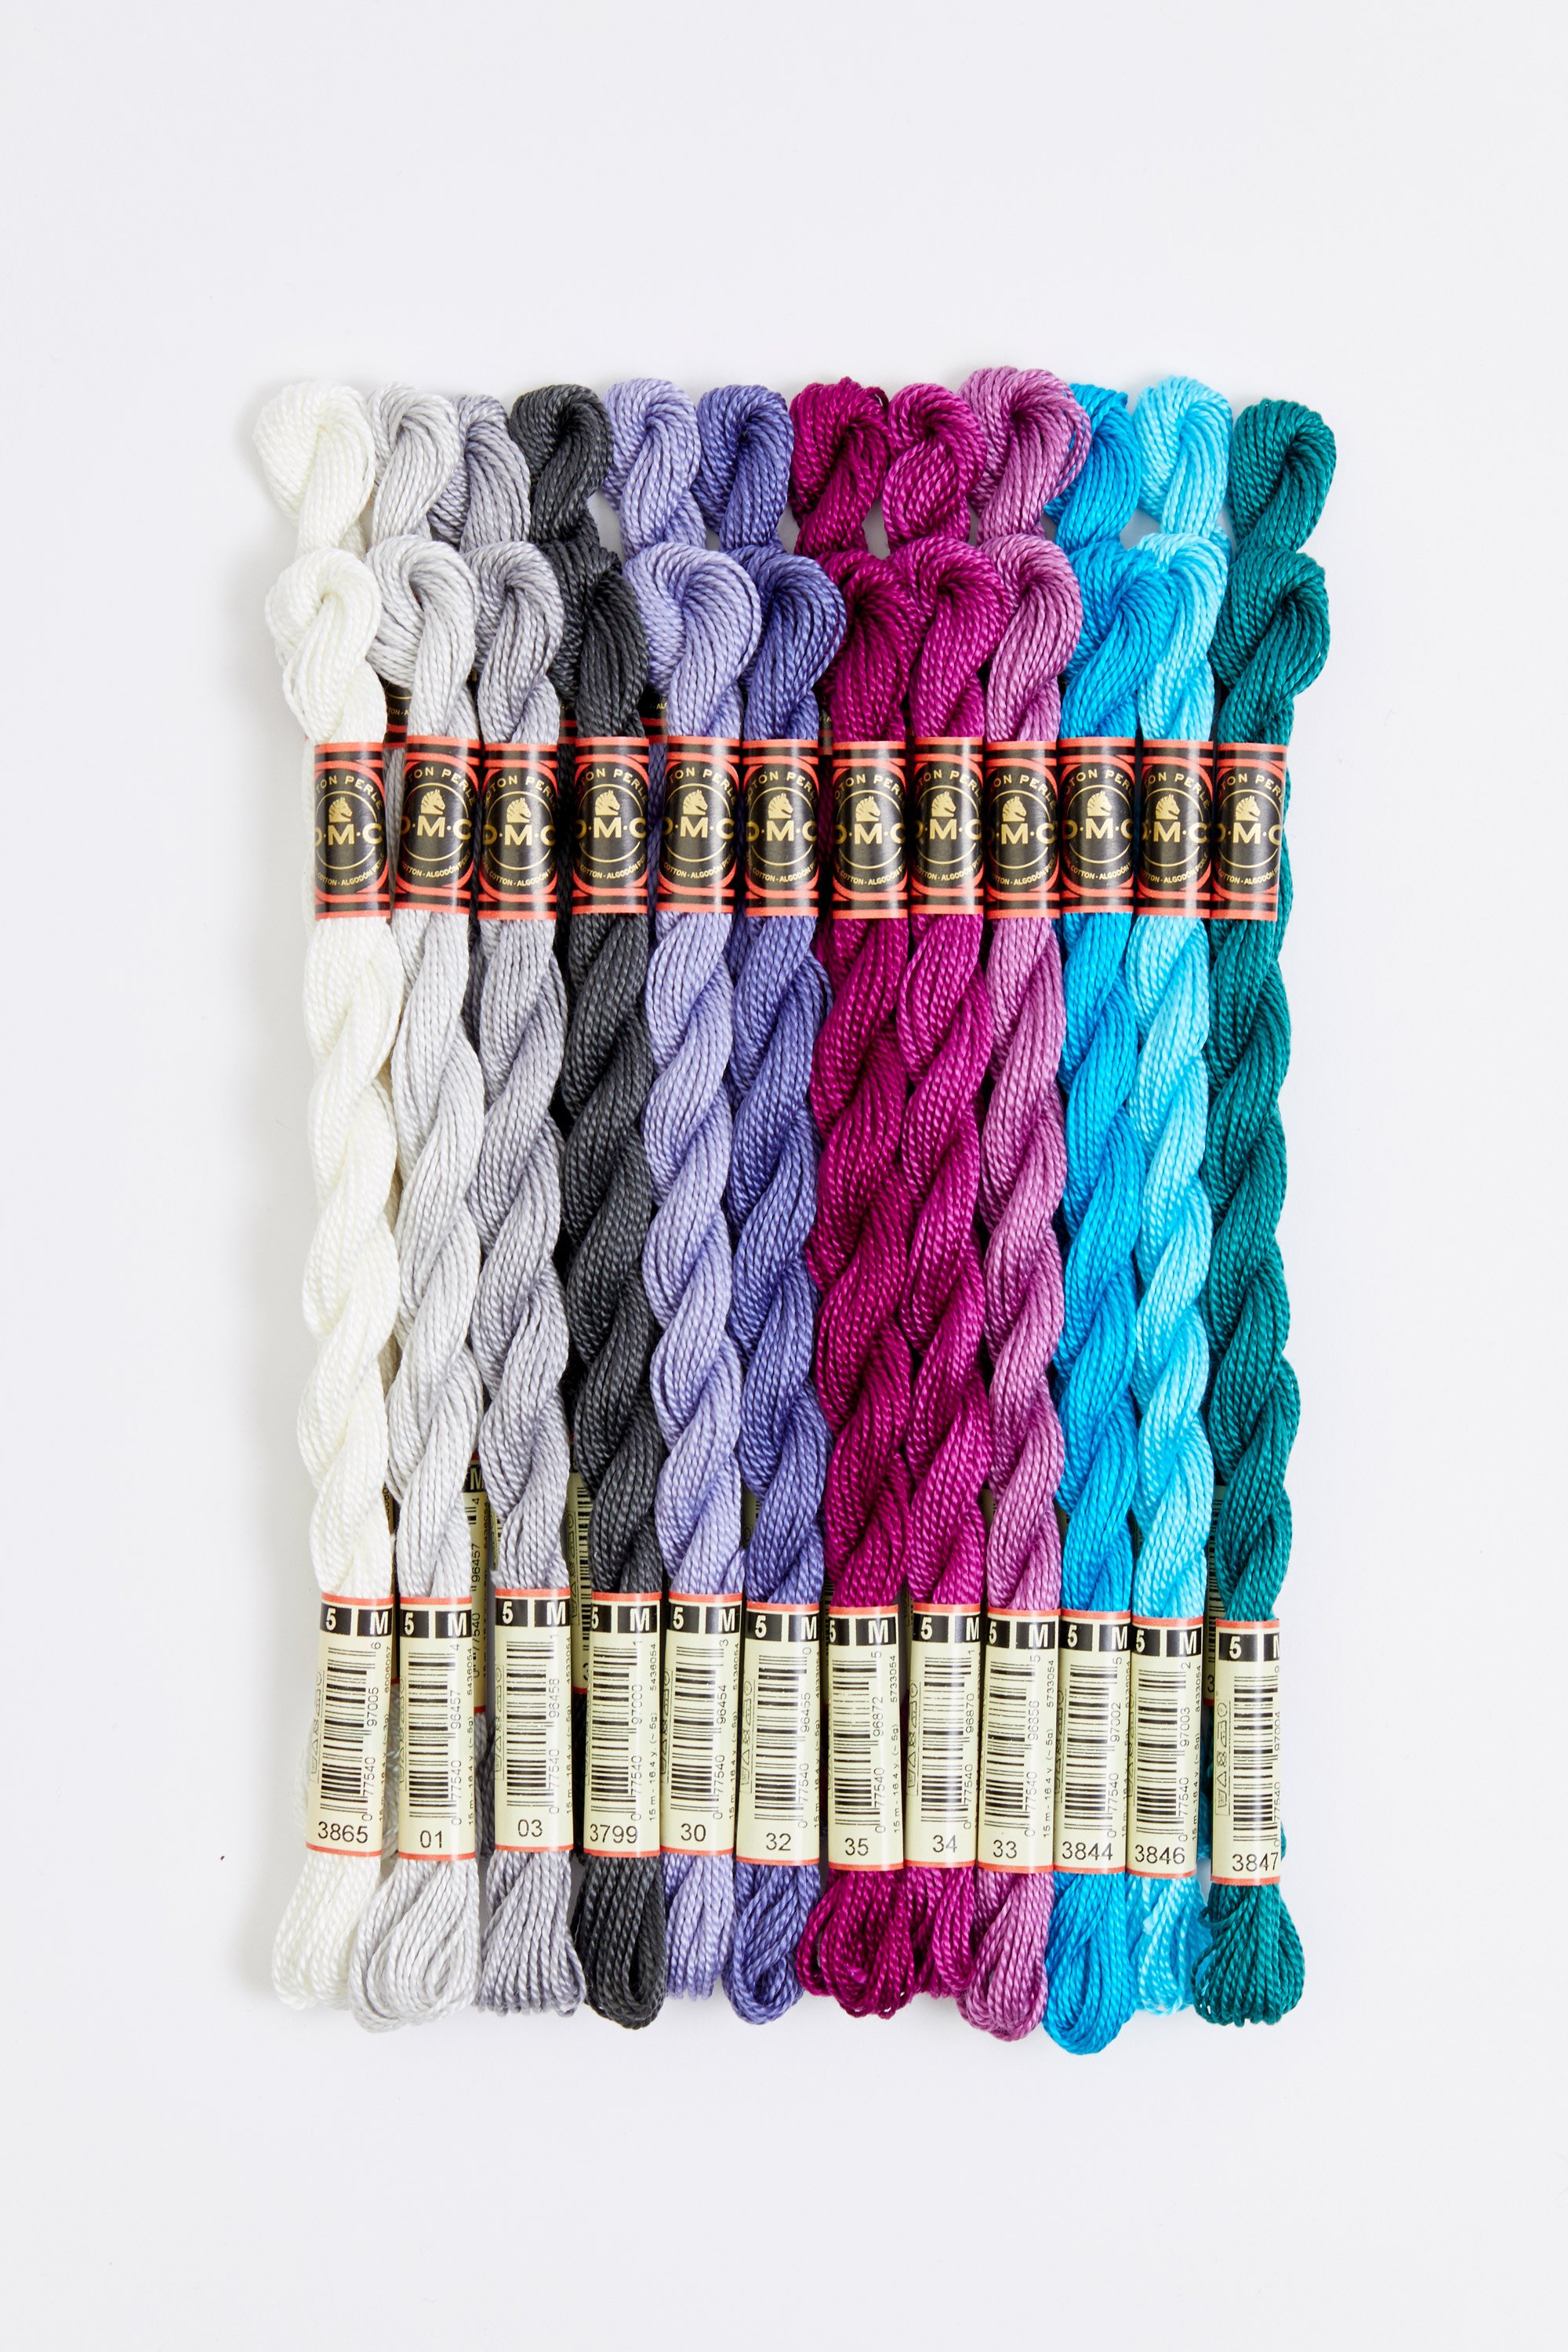 DMC Cotton Perle Thread Size 5 D115-5-M per pack of 2 